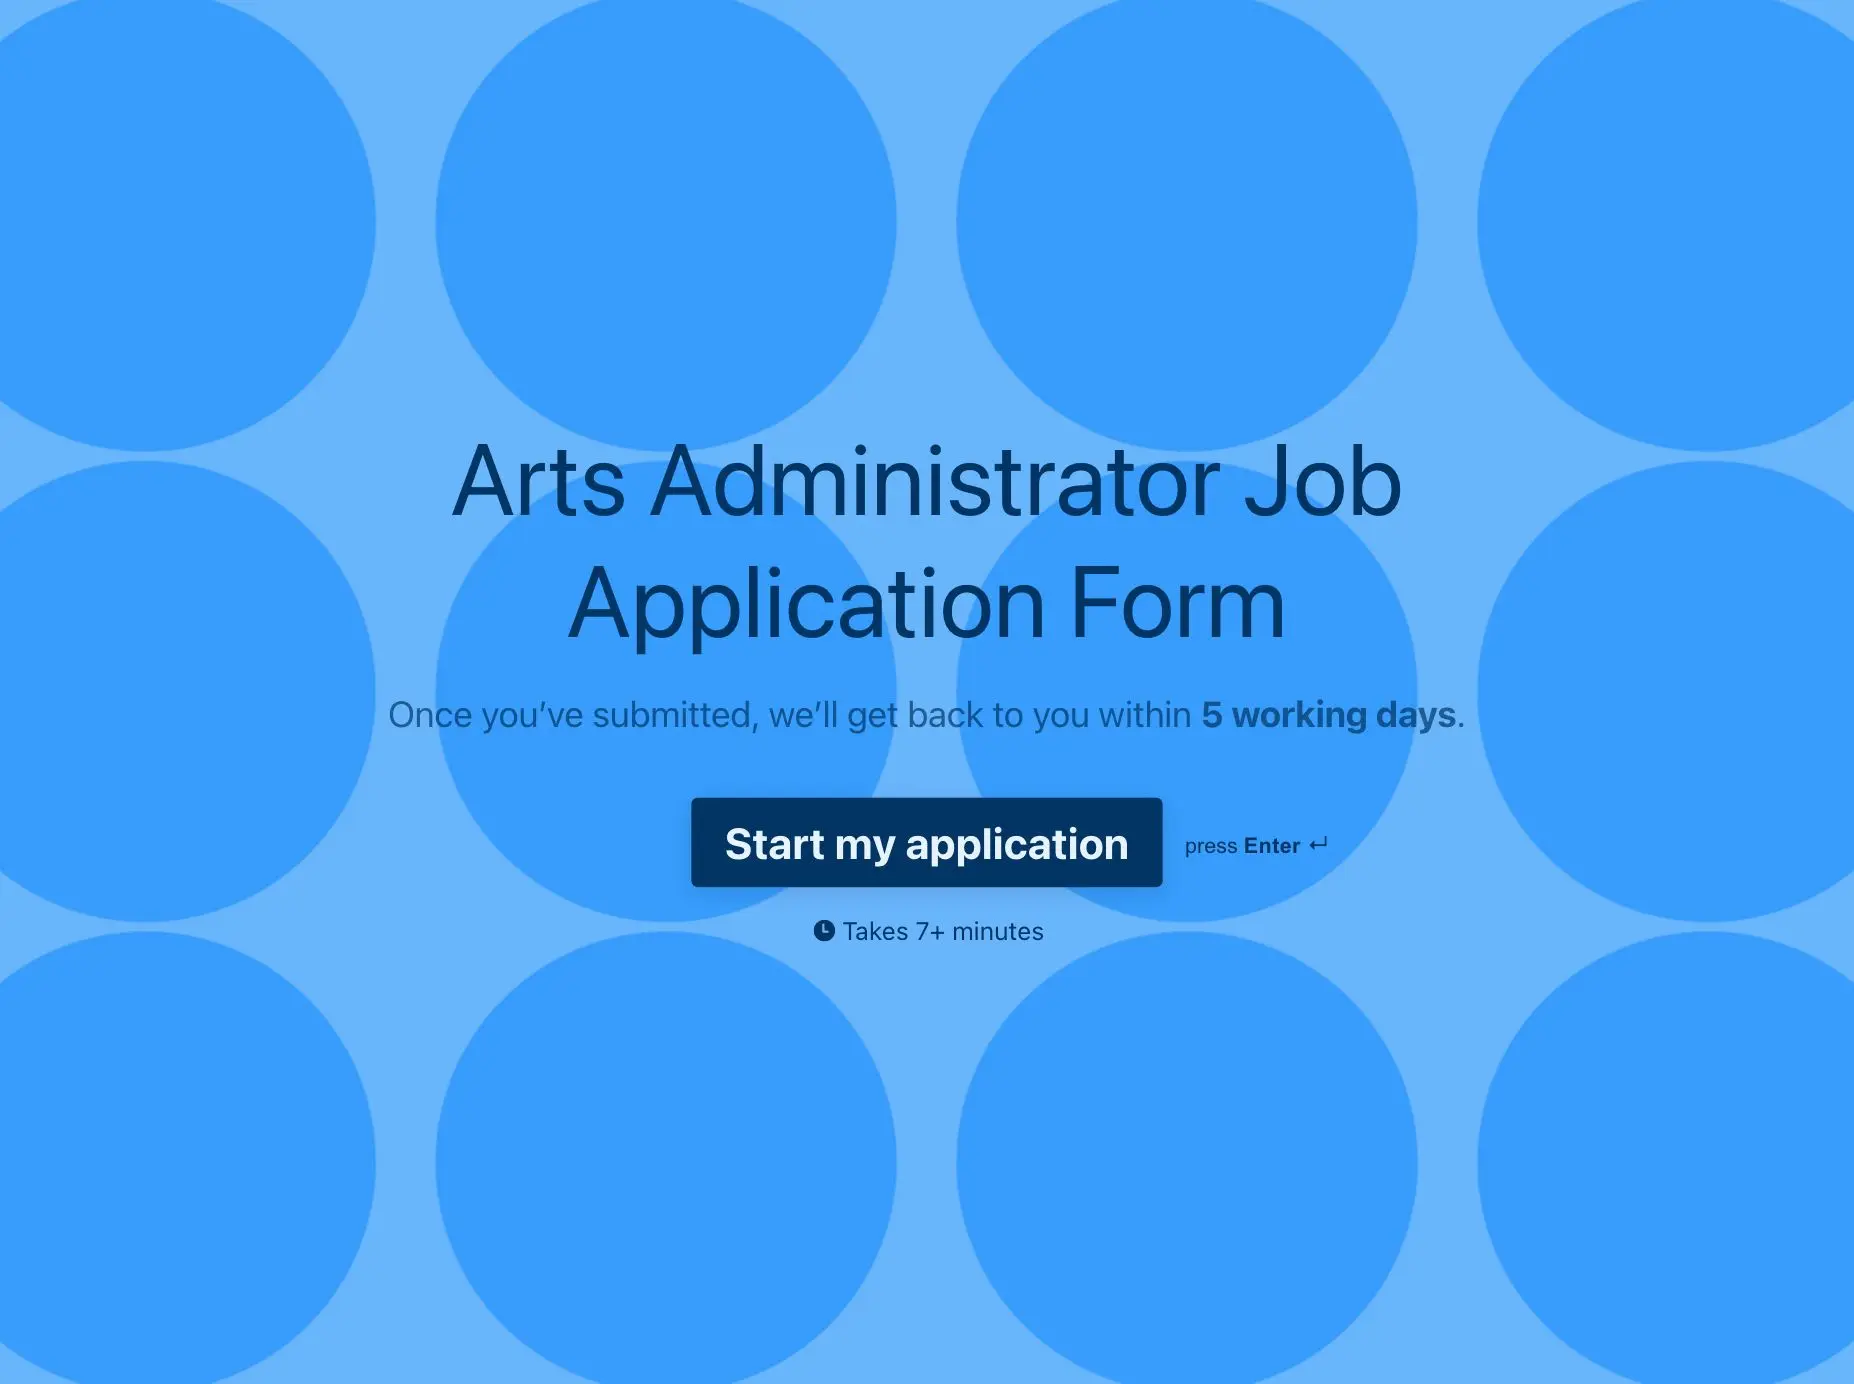 Arts Administrator Job Application Form Template Hero